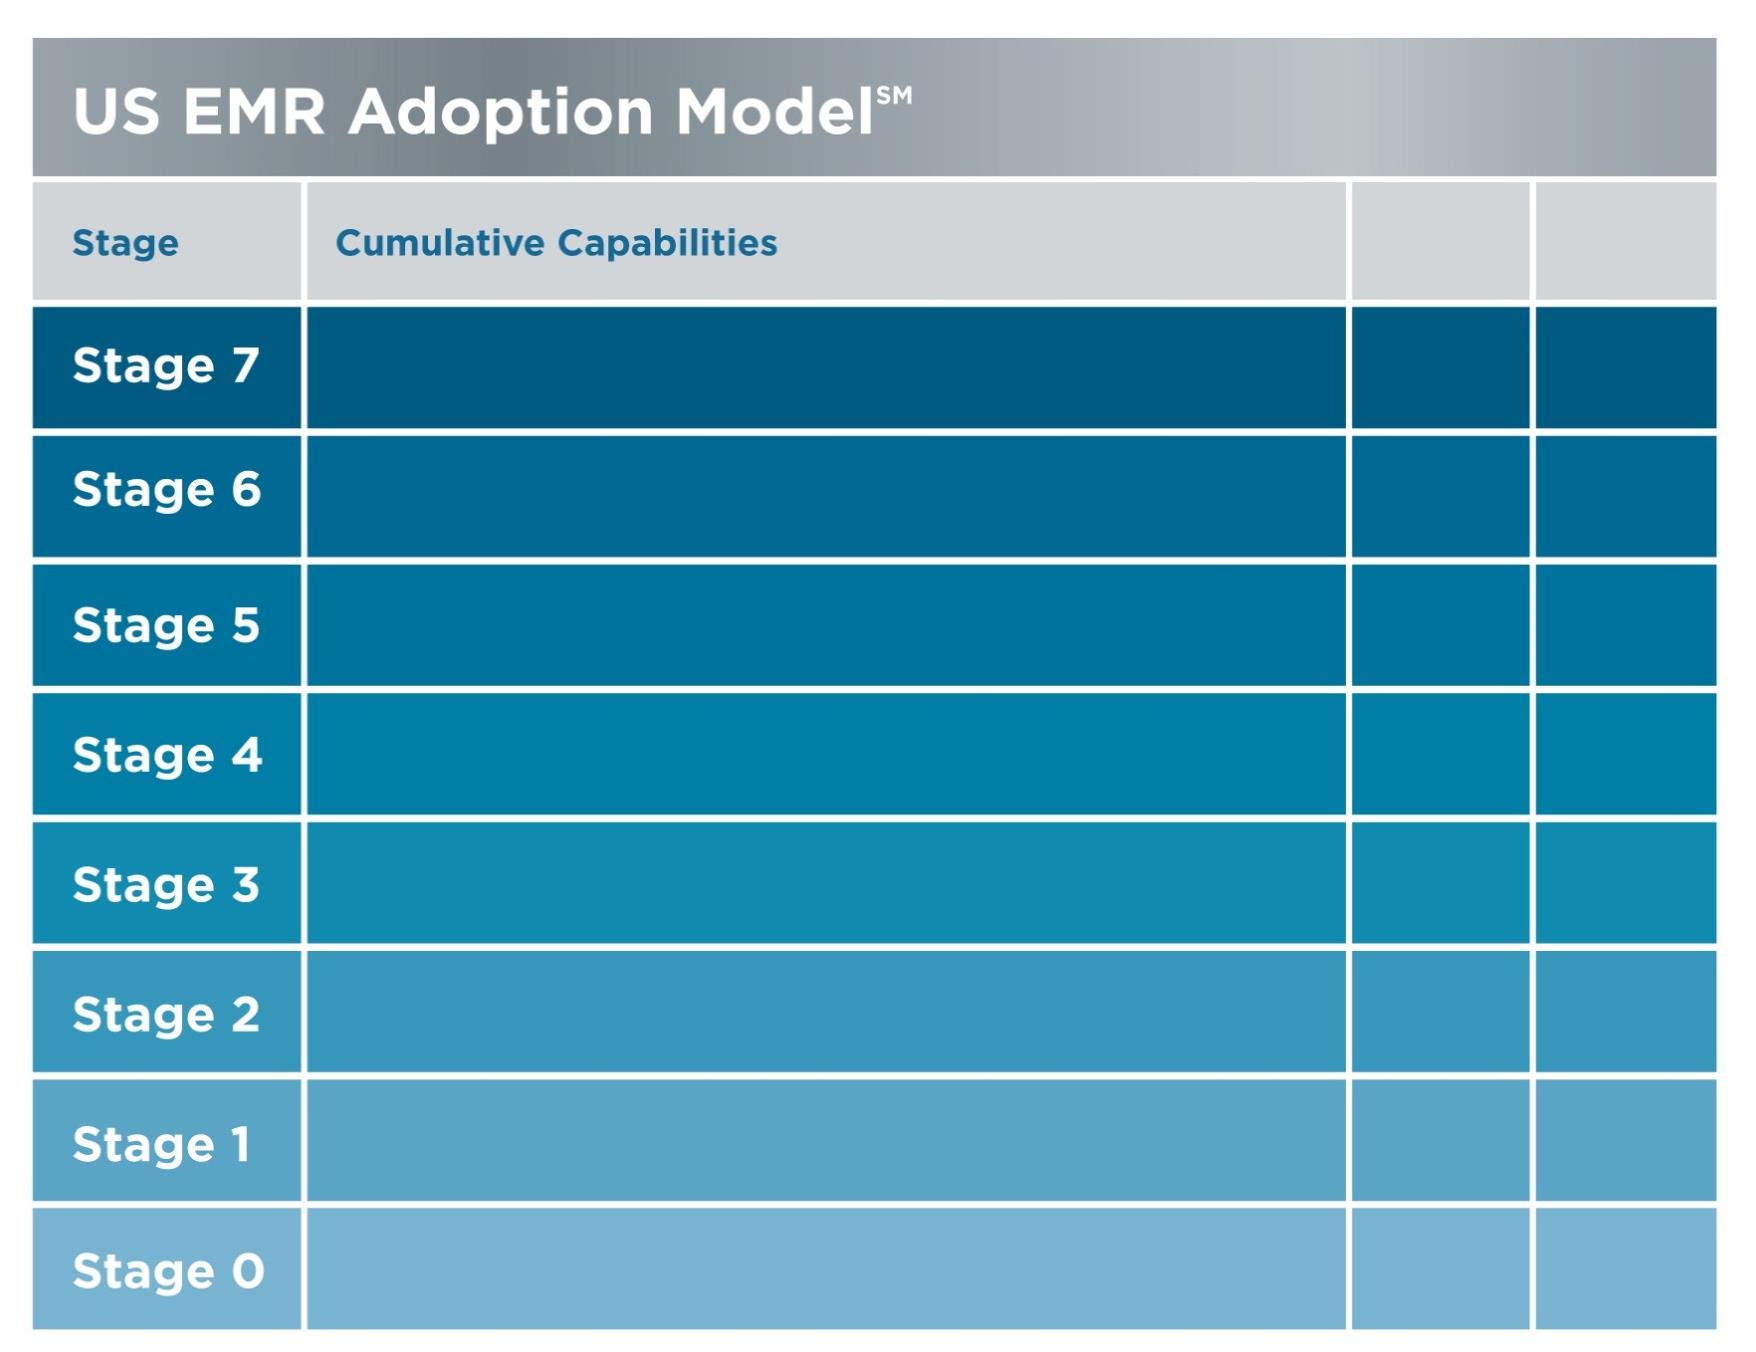 2011 2014 Complete EMR, CCDA transactions; Data Analytics to Improve Care Q2 1.1% Q2 3.